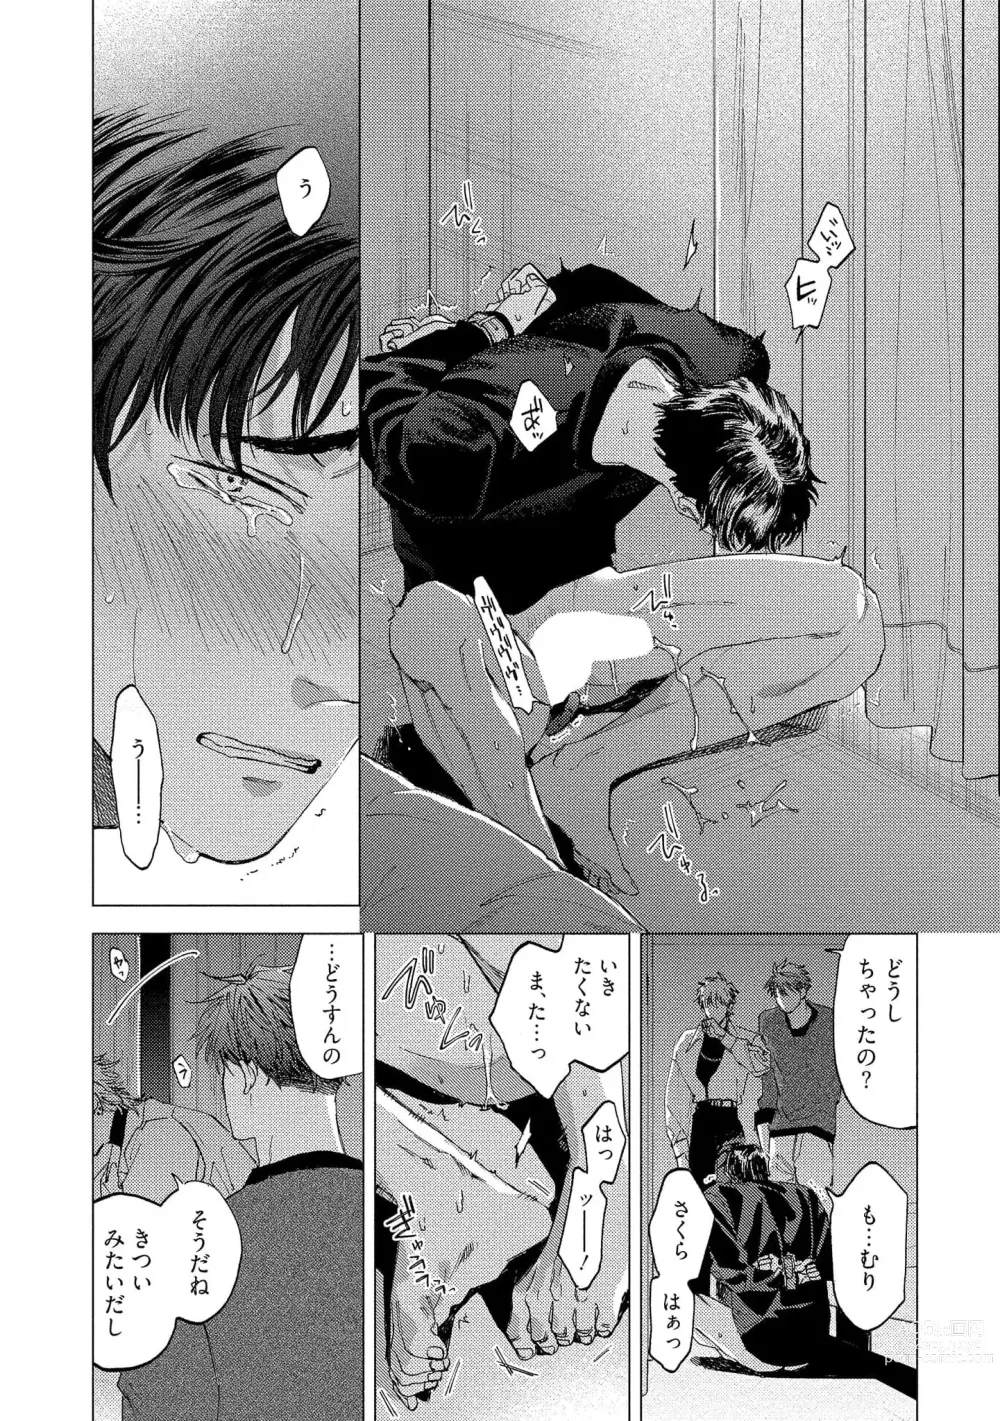 Page 156 of manga Fukushuu ga Tokenai